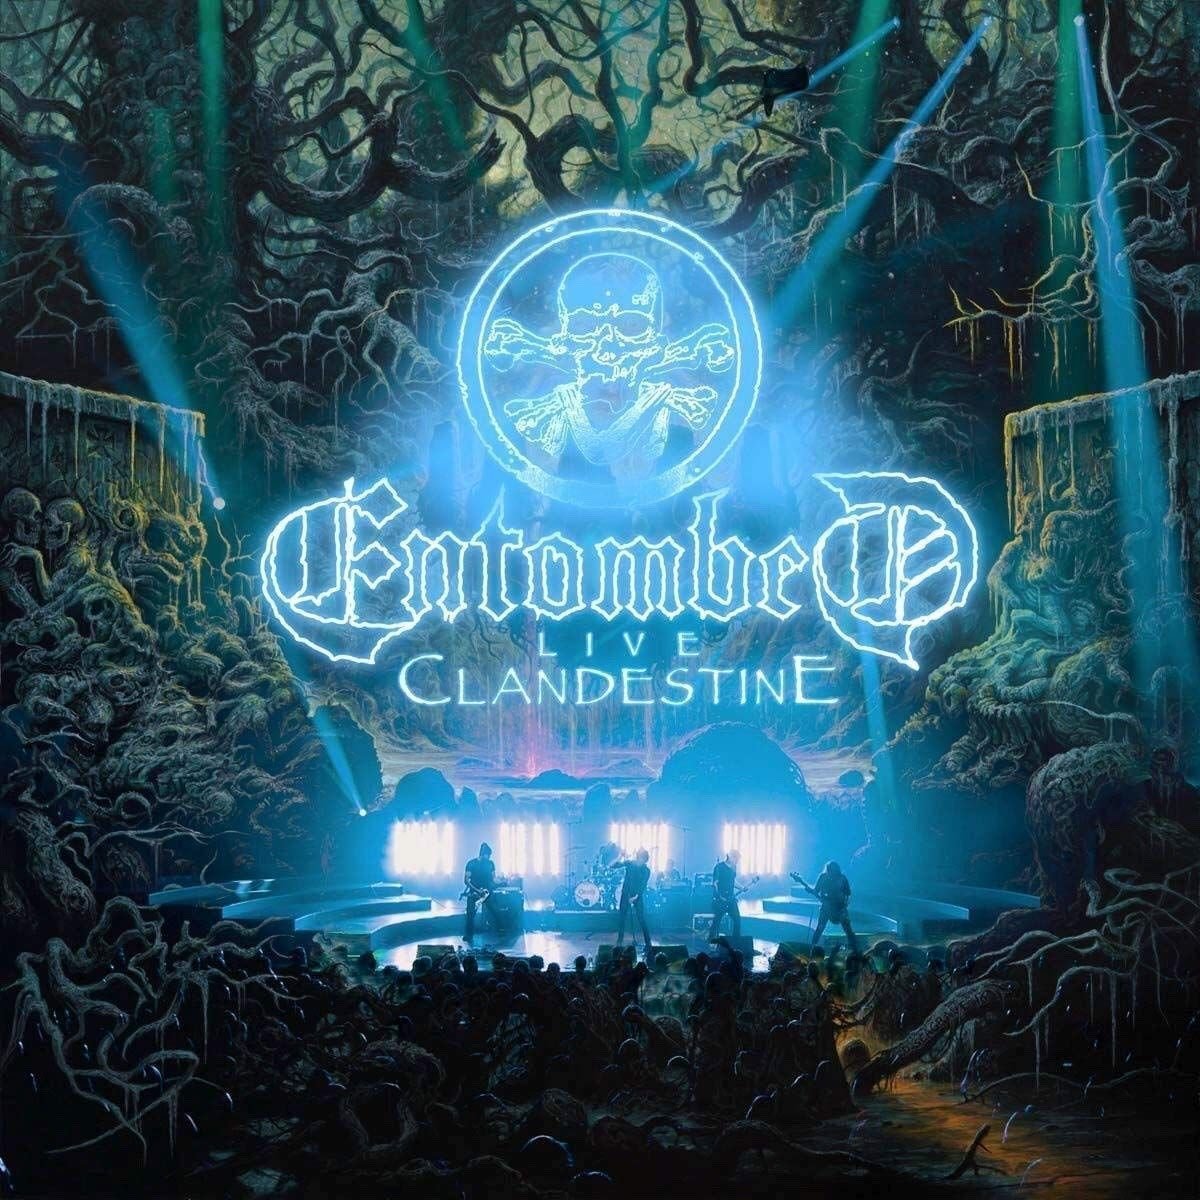 LP Entombed - Clandestine Live (2 LP)